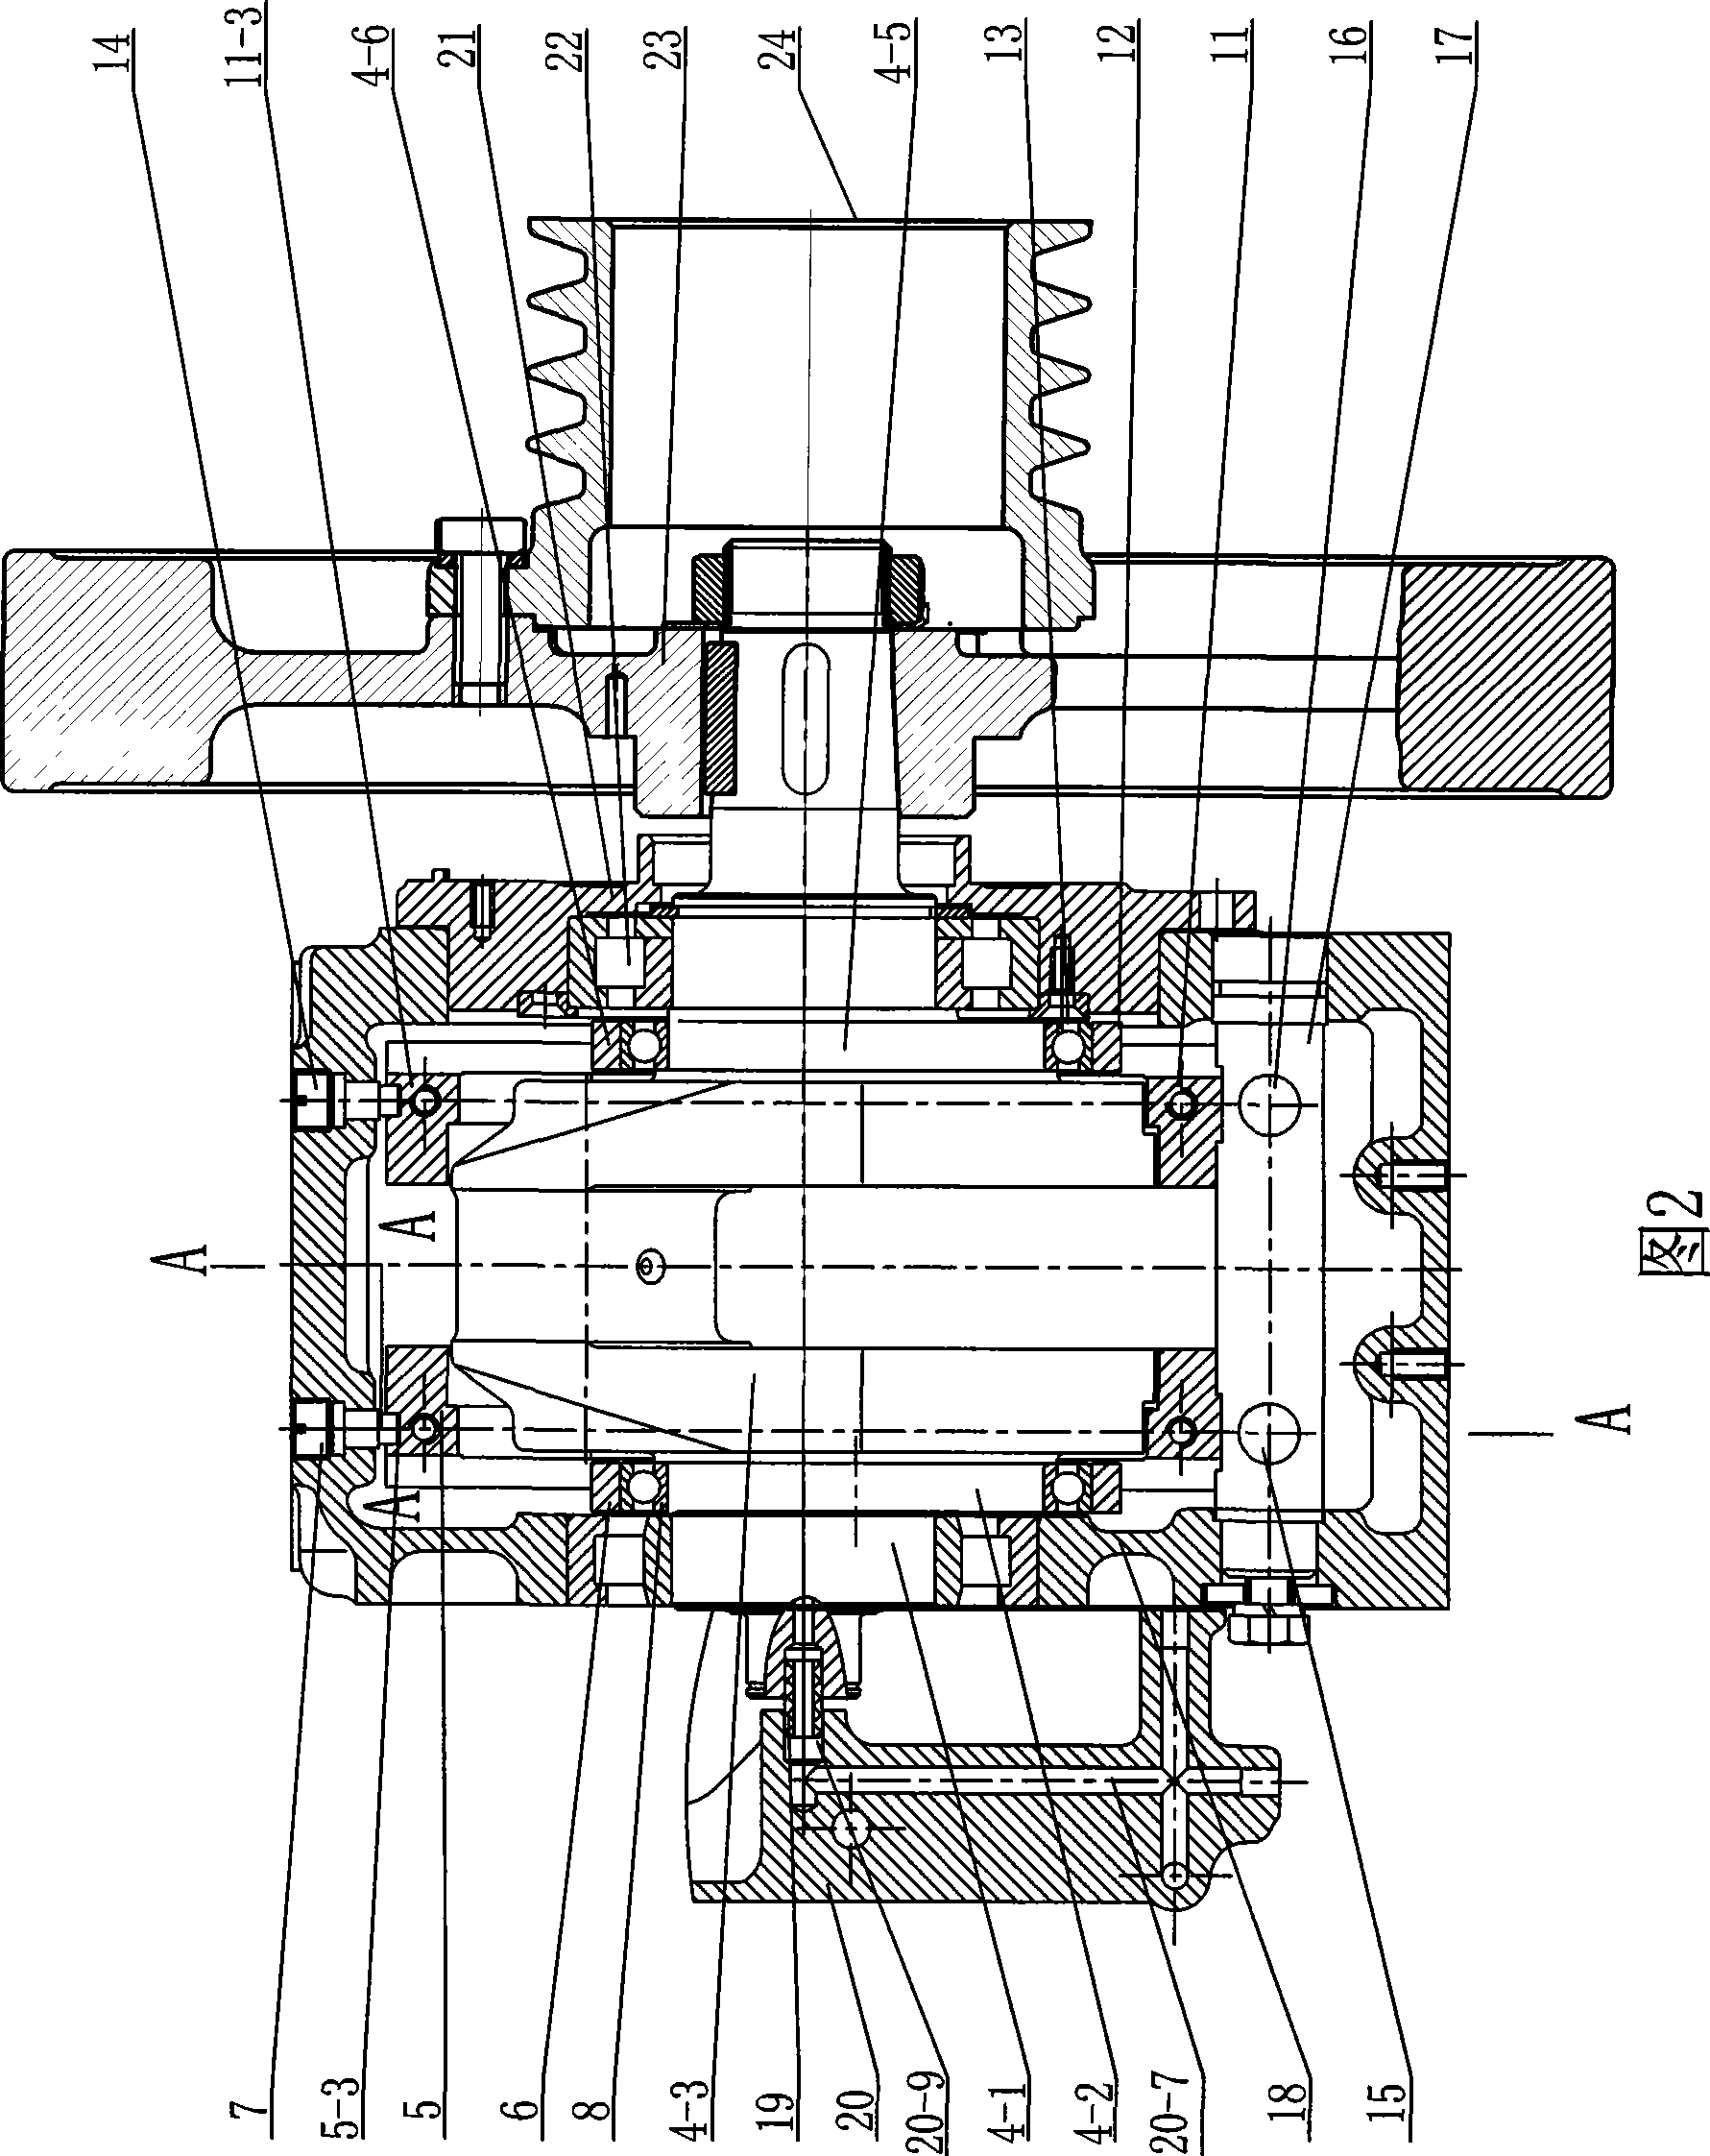 Full-equilibrium single cylinder diesel